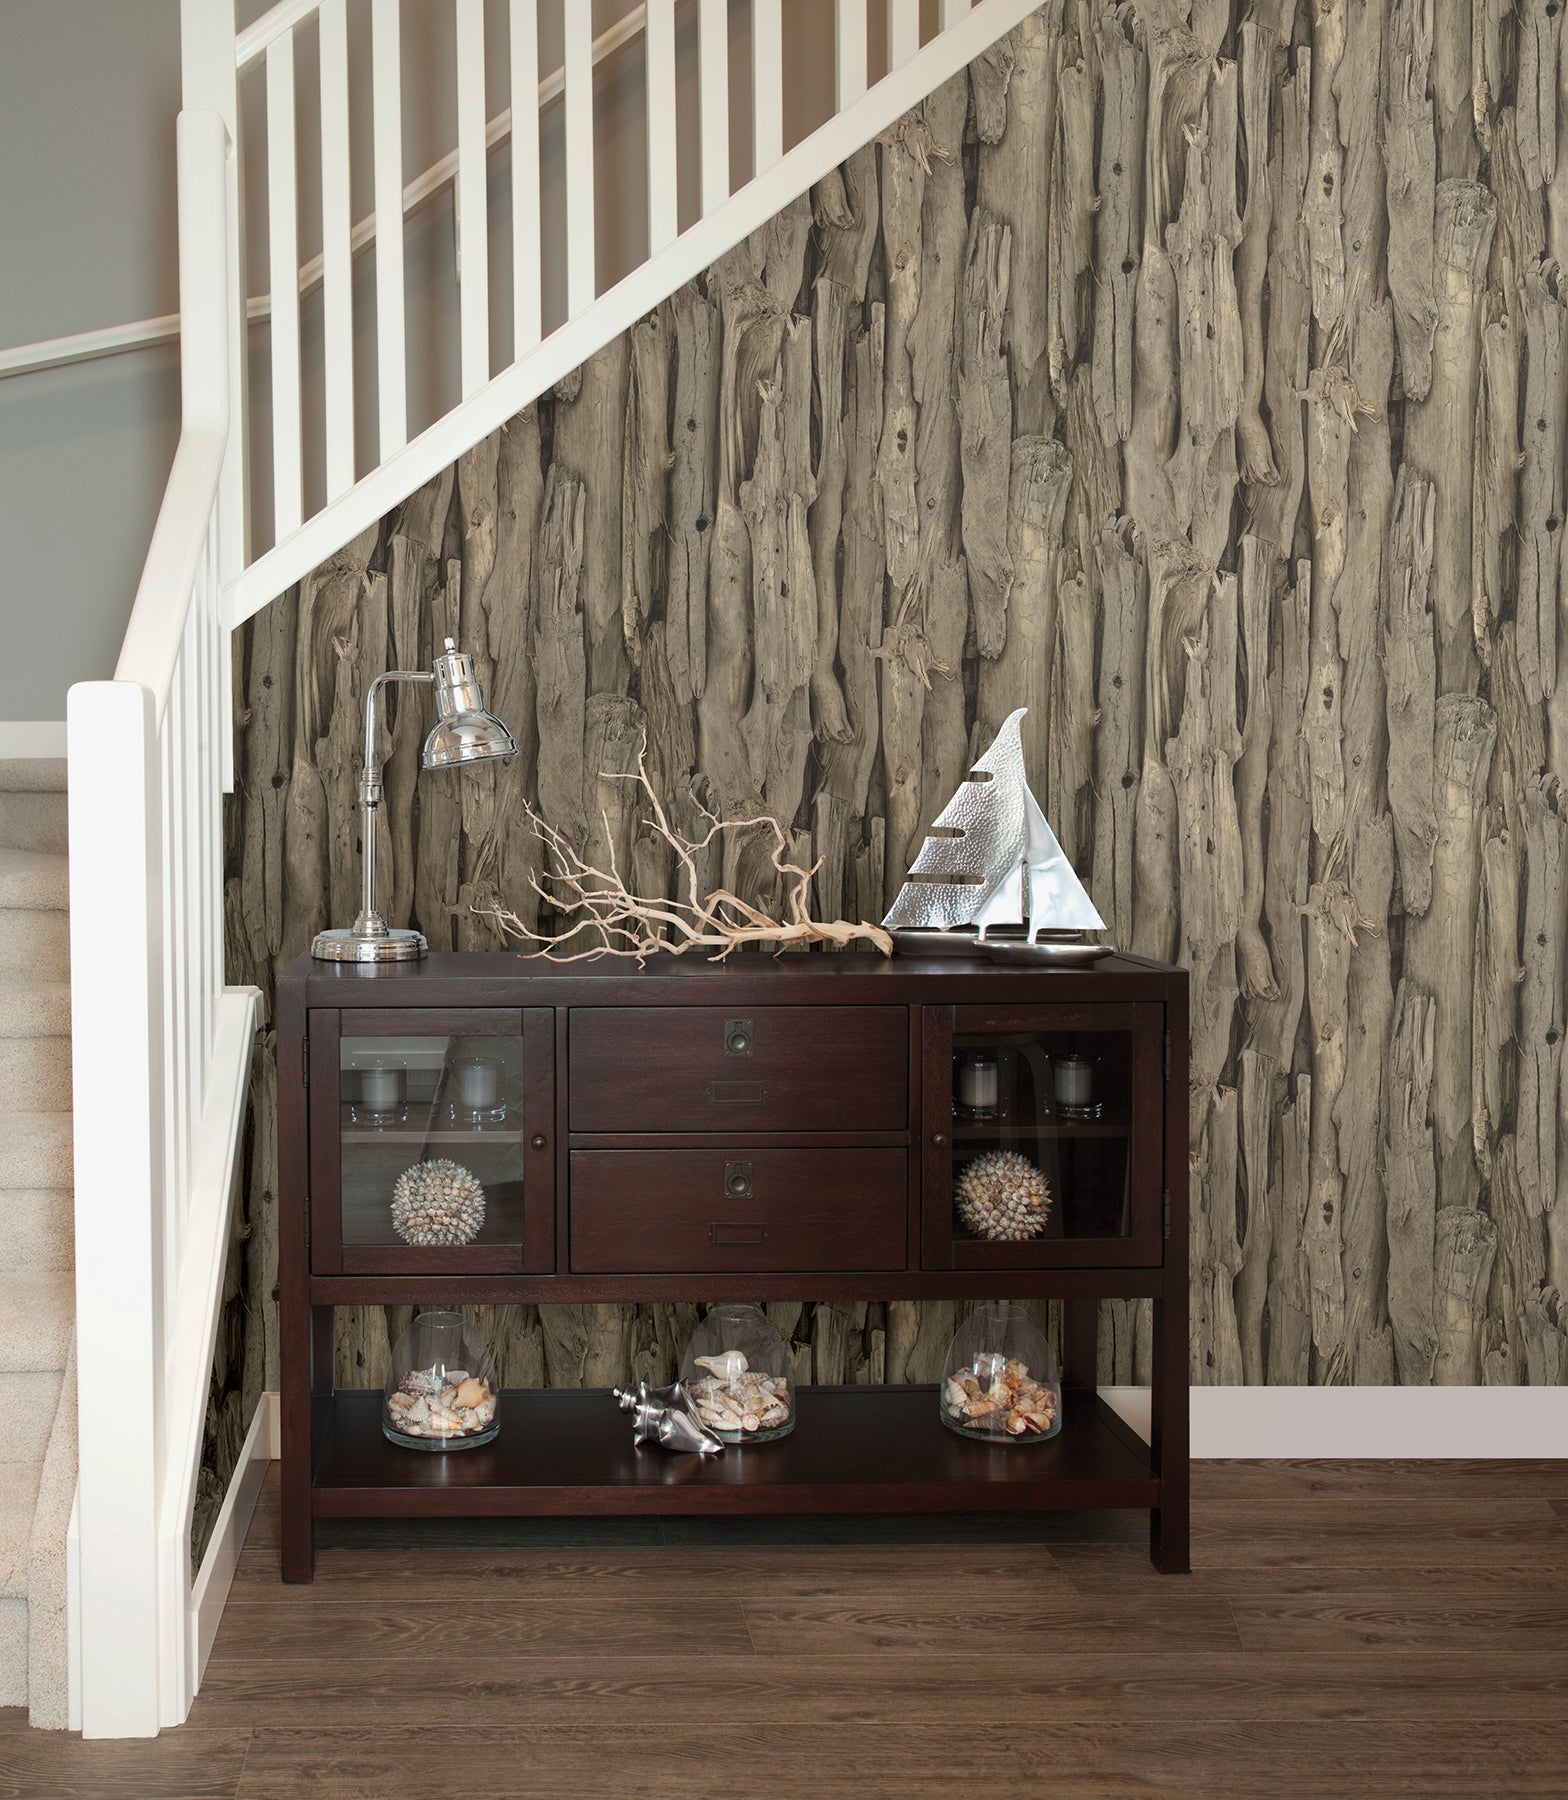 Shop 2774-473216 stones woods browns textured wallpaper advantage Wallpaper